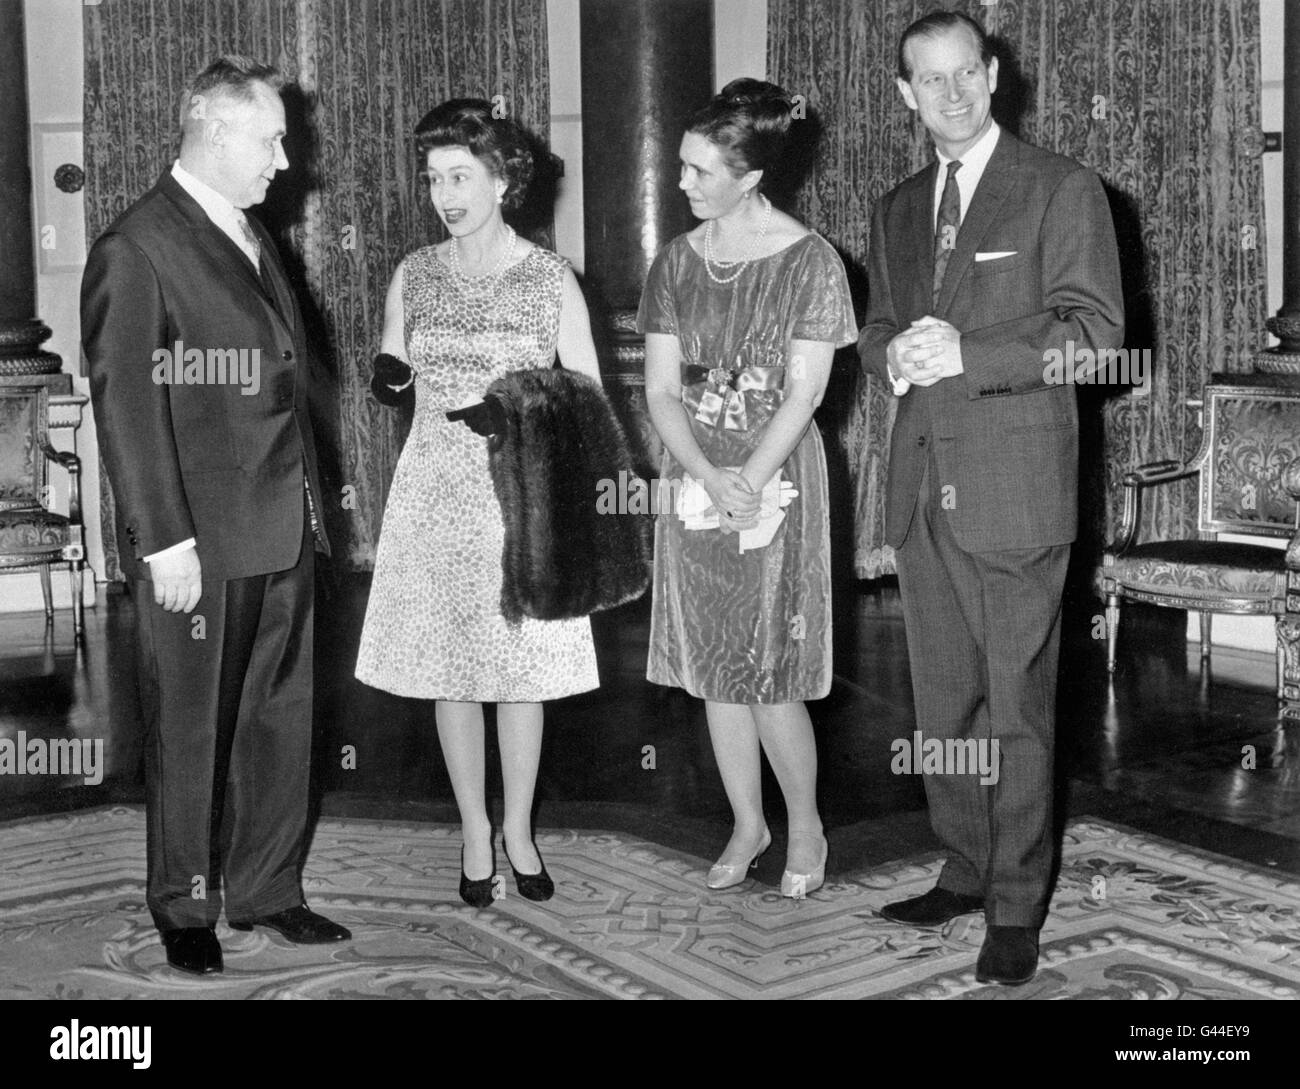 Royalty - sowjetischen Präsidenten Kosygin Besuch - Buckingham Palace, London Stockfoto